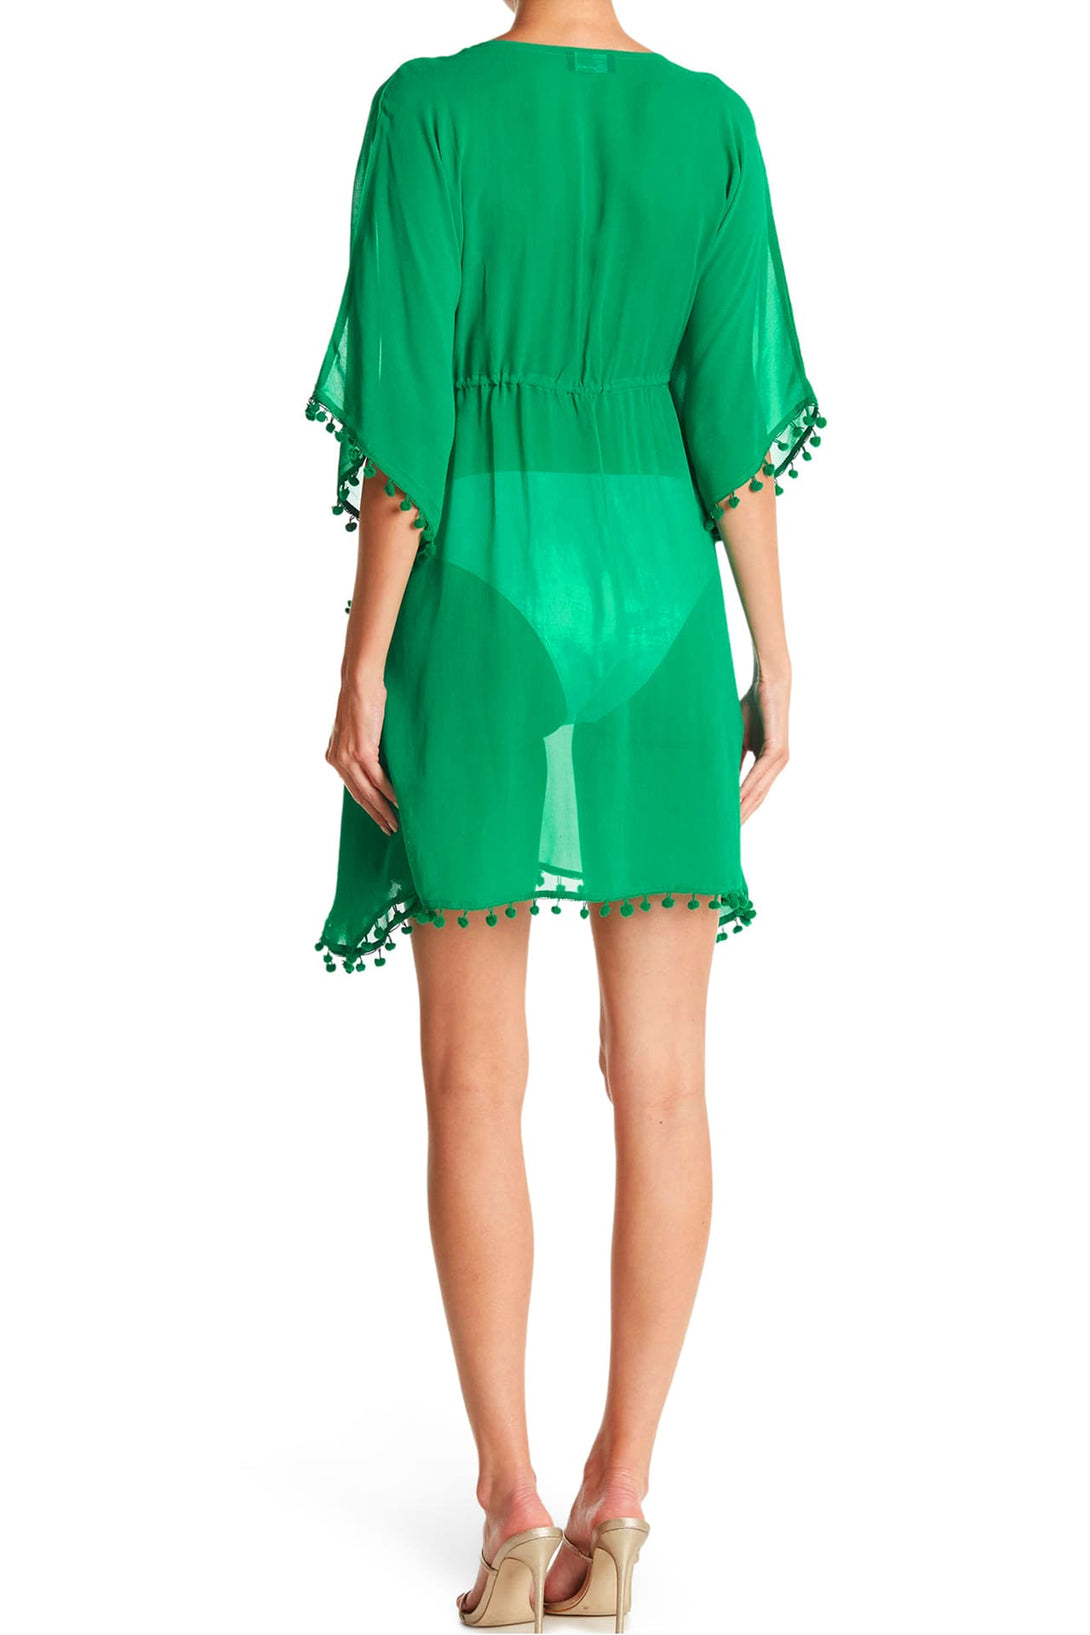 "green swimsuit cover up" "Shahida Parides" "swimsuit cover up" "kimono swim cover up"